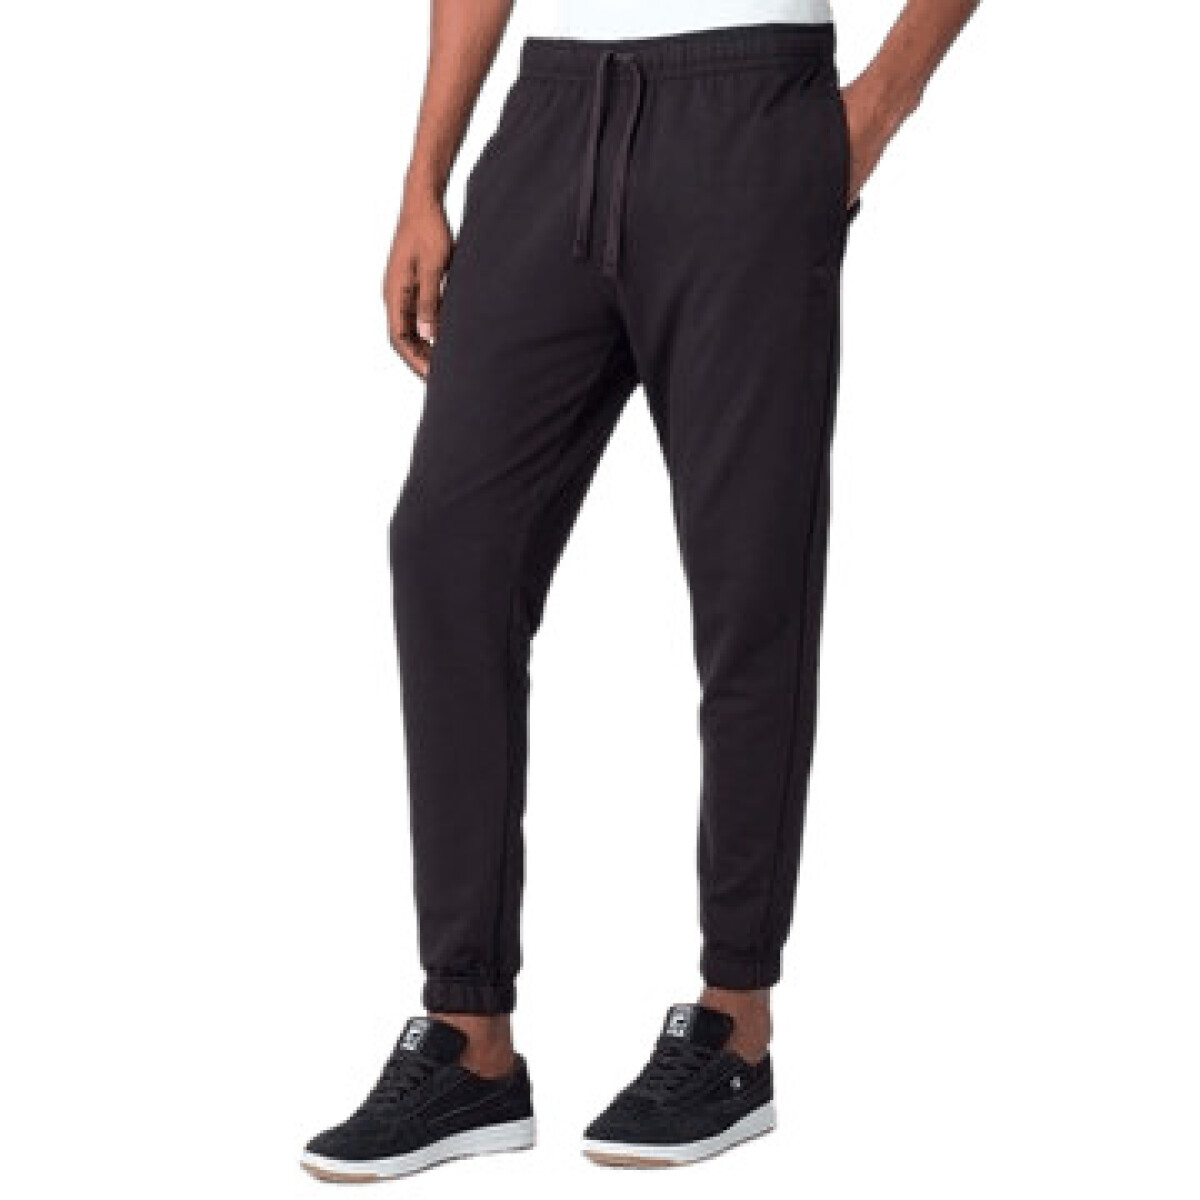 Pantalon Fila Moda Hombre Basic Classic Negro-Negro - S/C 